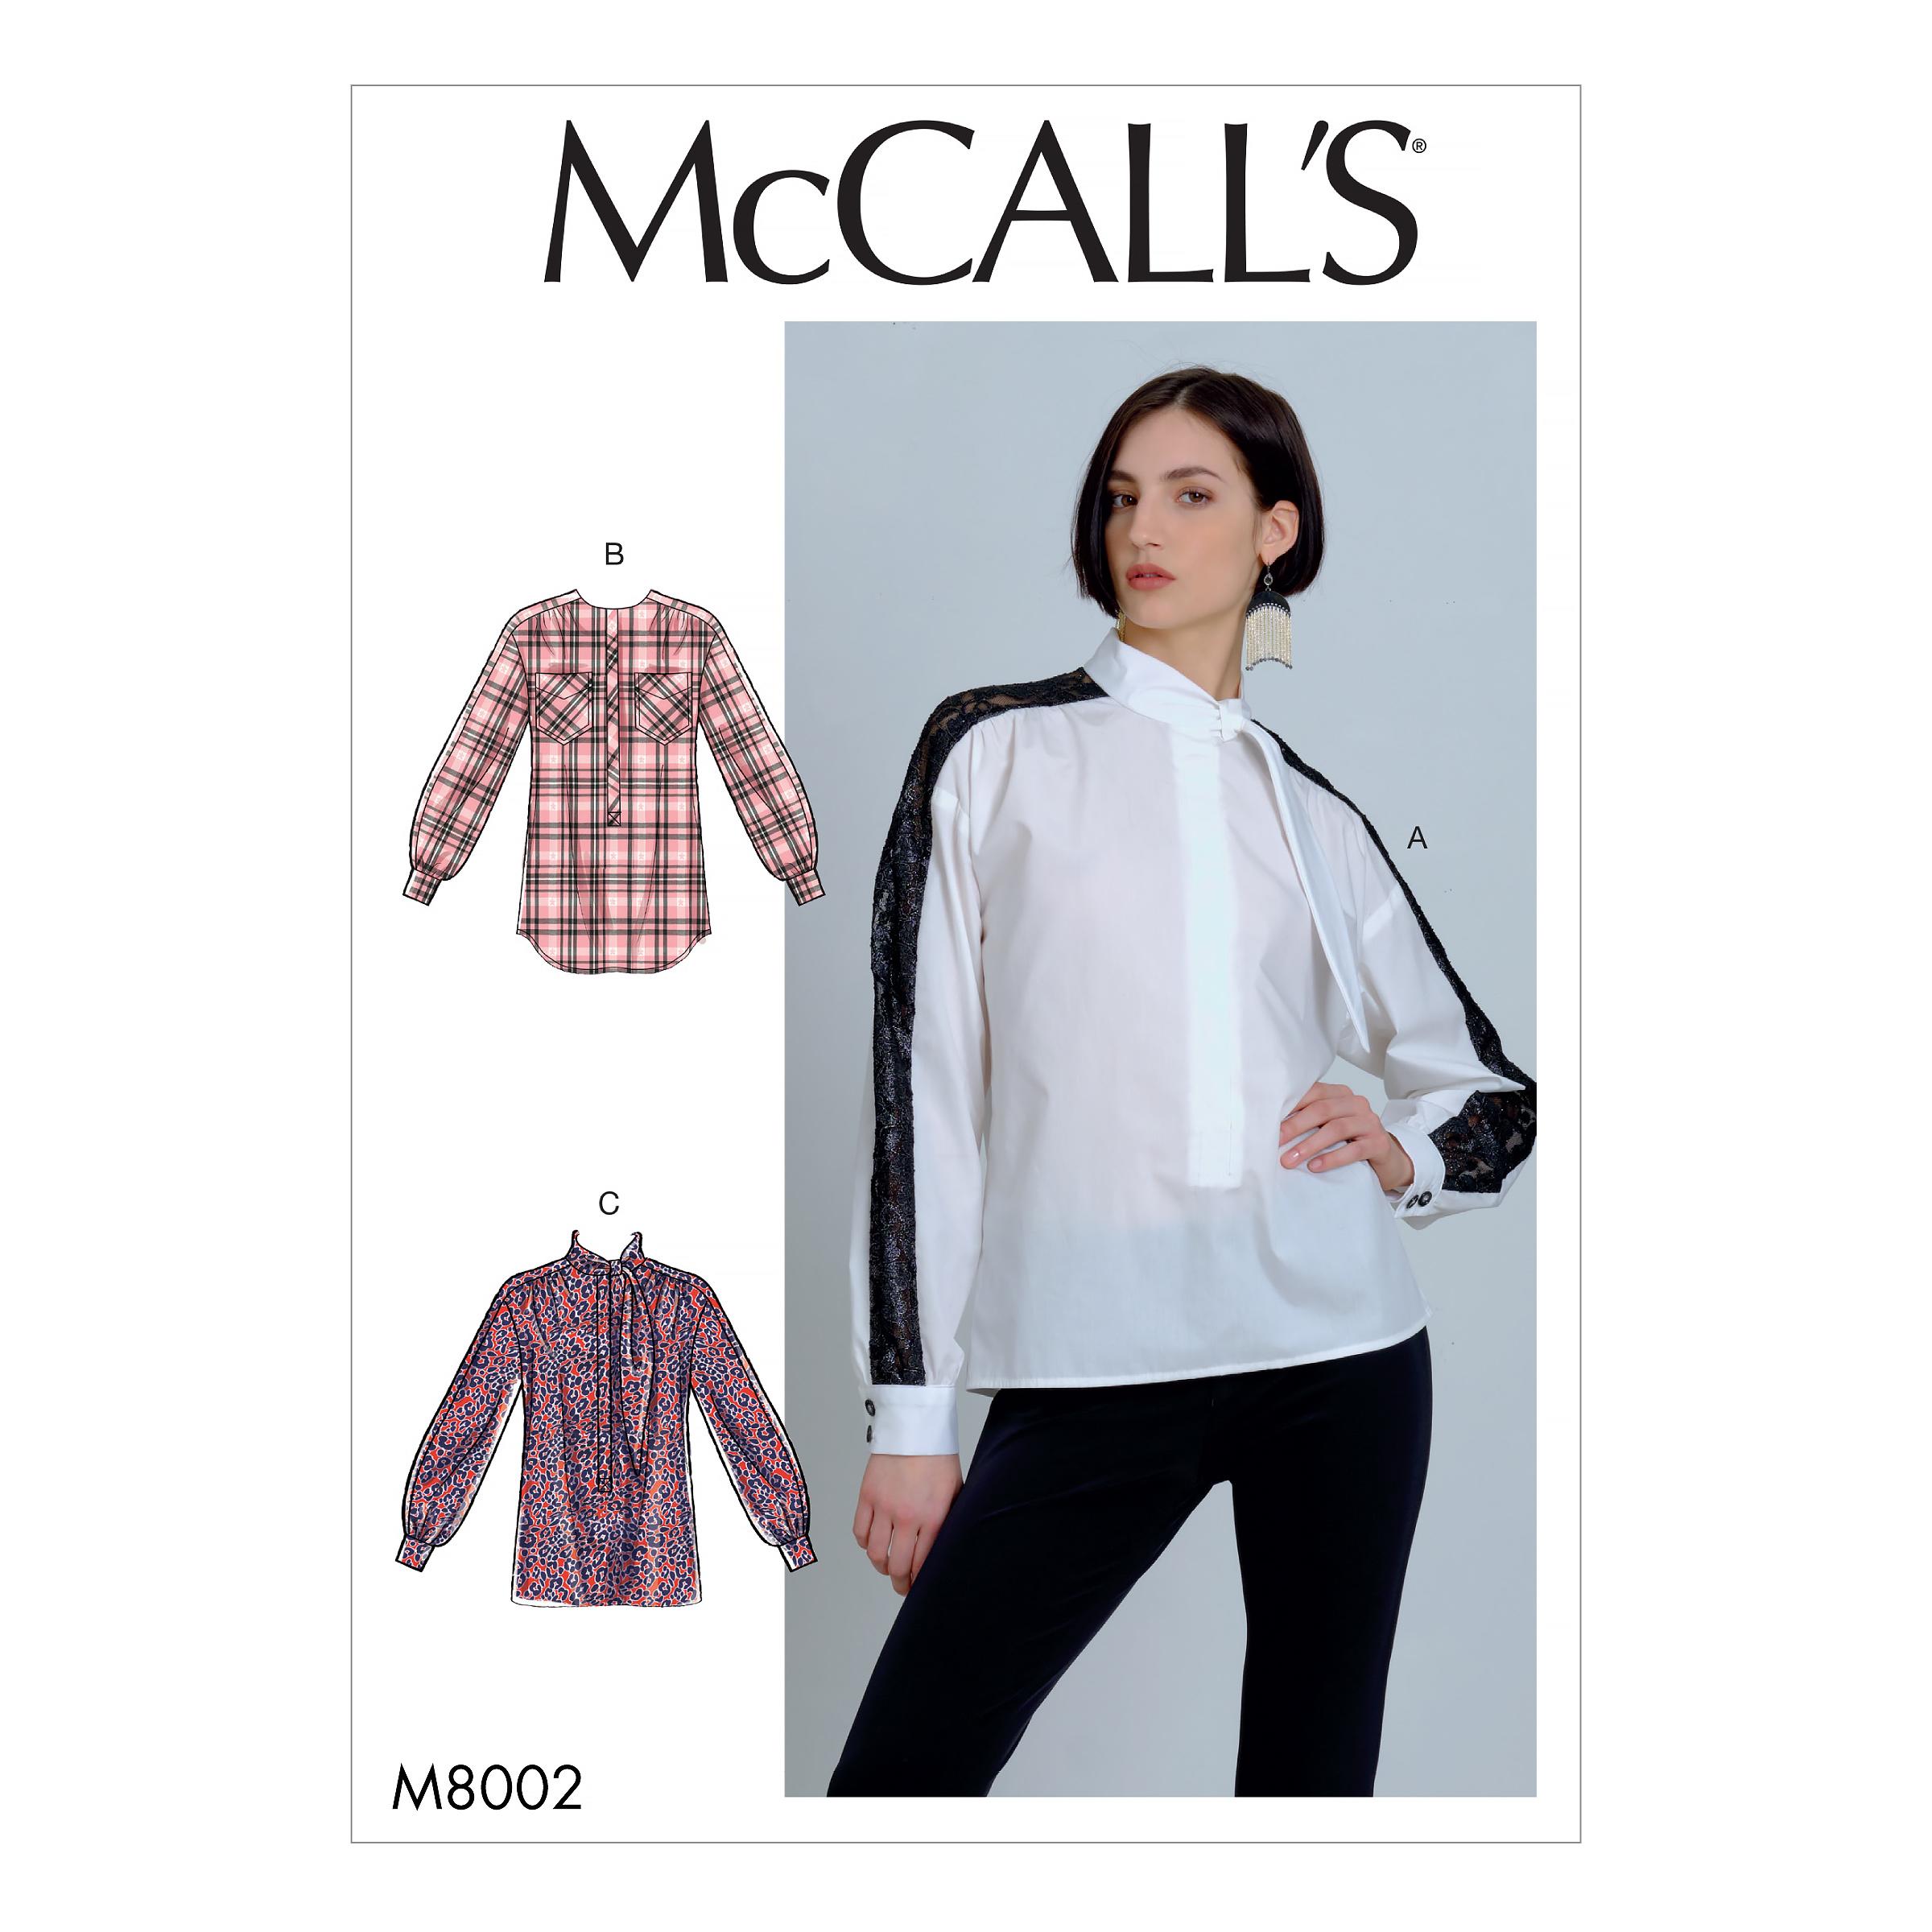 McCalls M8002 Misses Tops